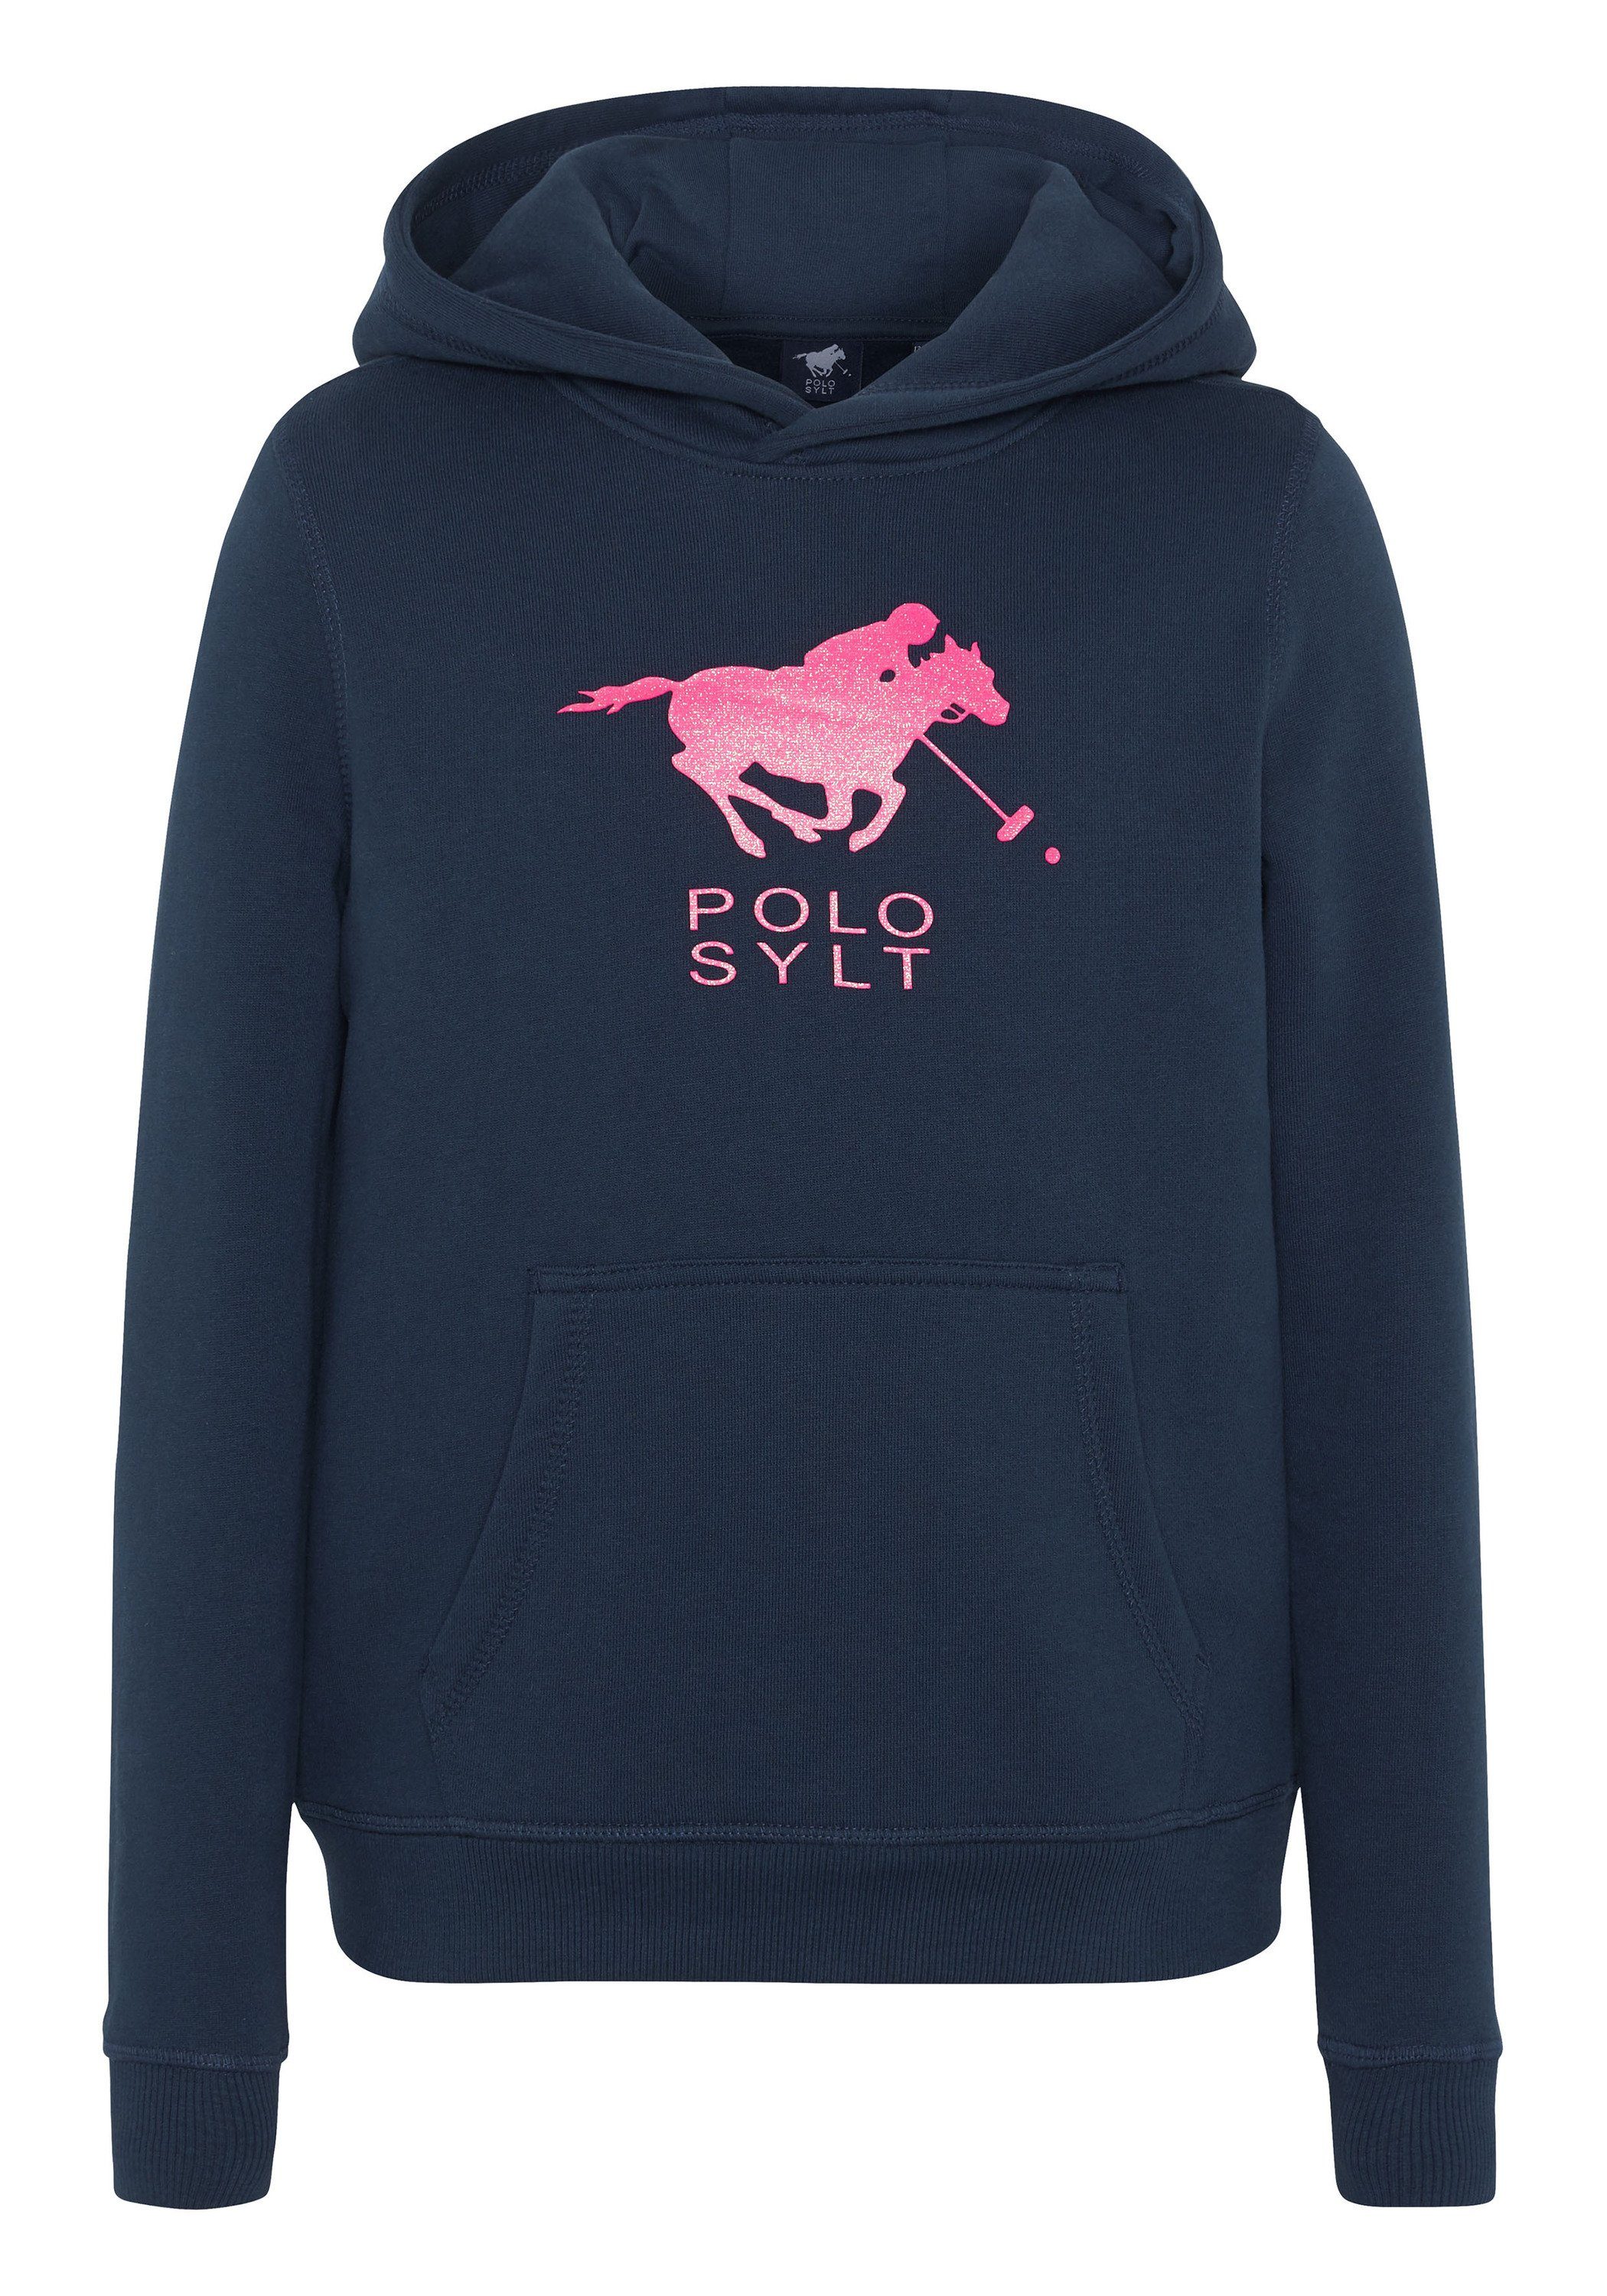 Polo Sylt Sweatshirt mit Eclipse glitzerndem Label-Motiv Total